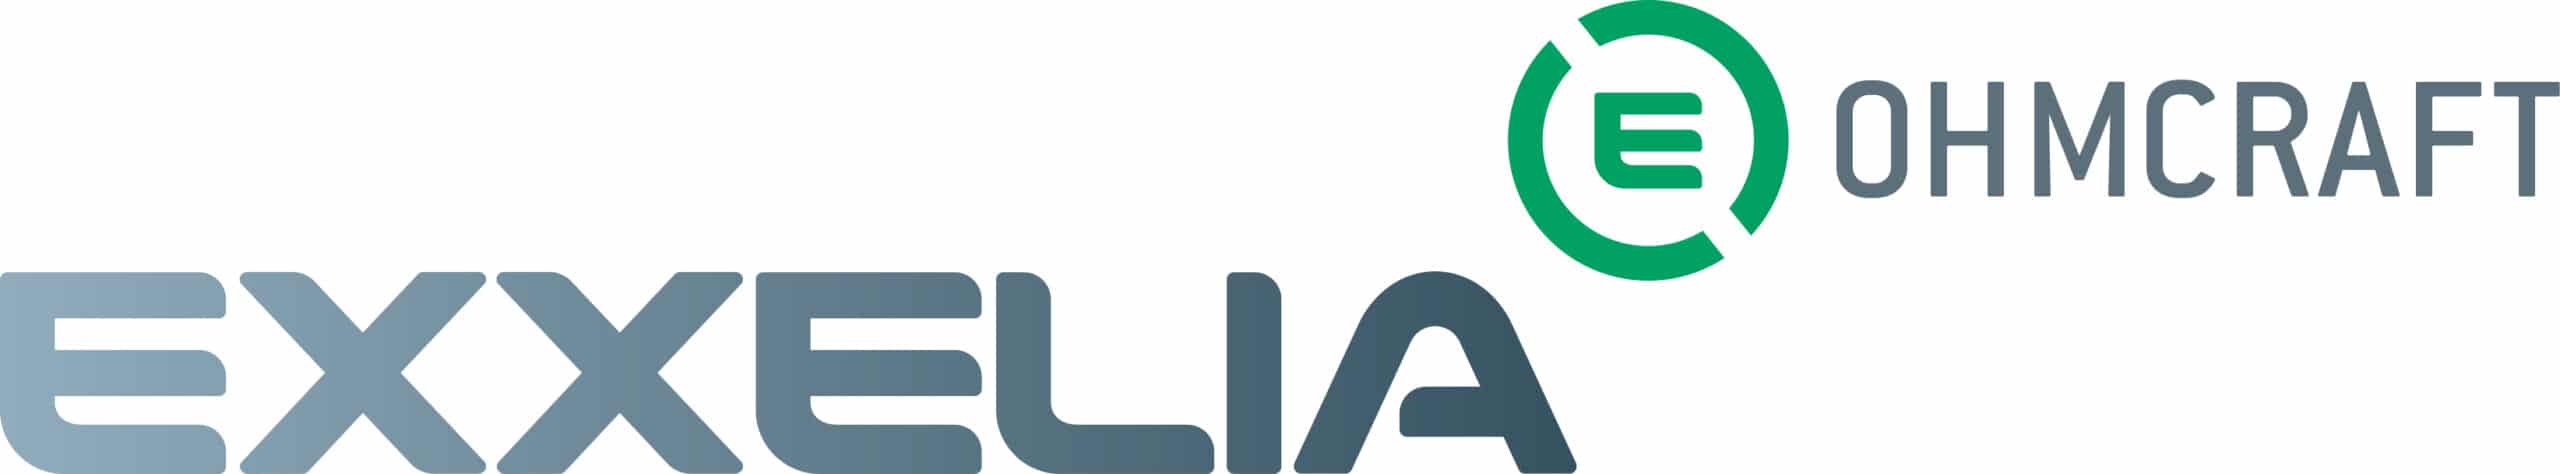 Exxelia Ohmcraft Company Logo 2020